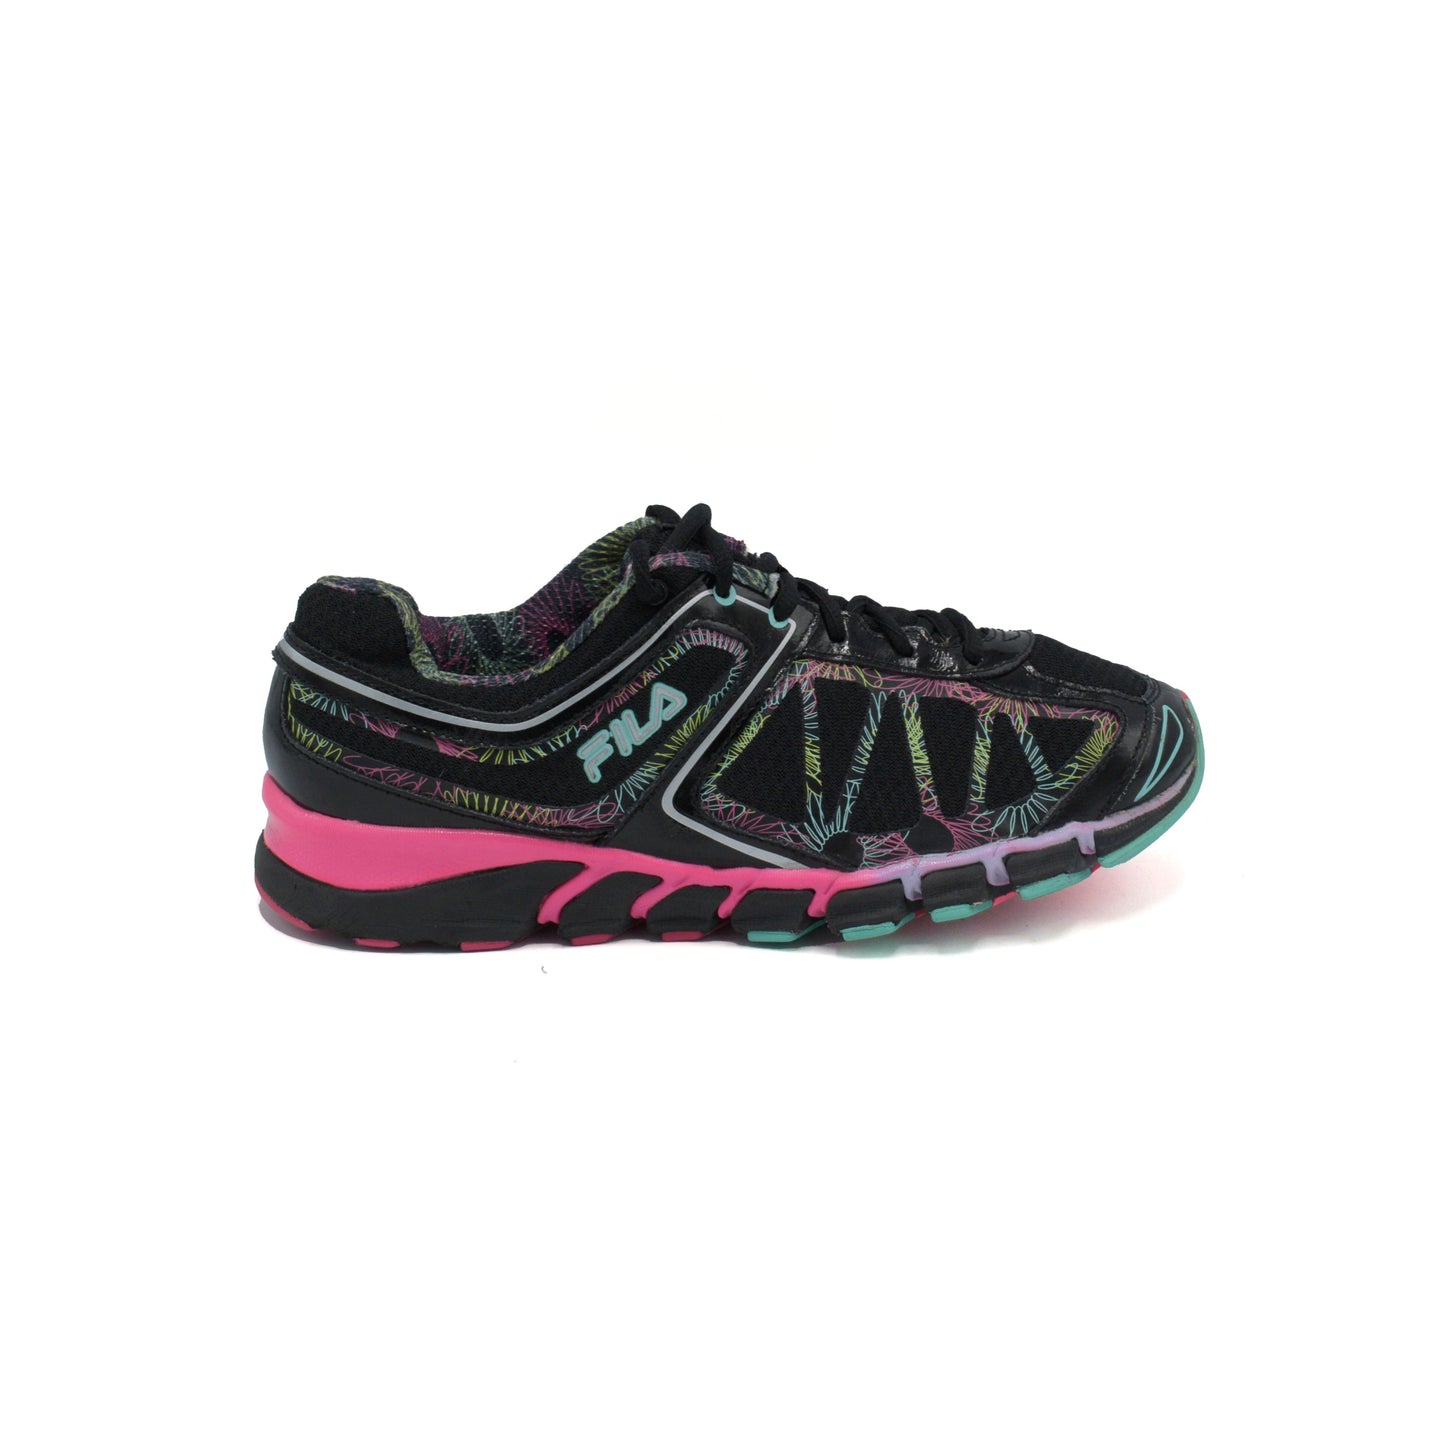 FILA Women's Memory Sprint Evo Running Shoes